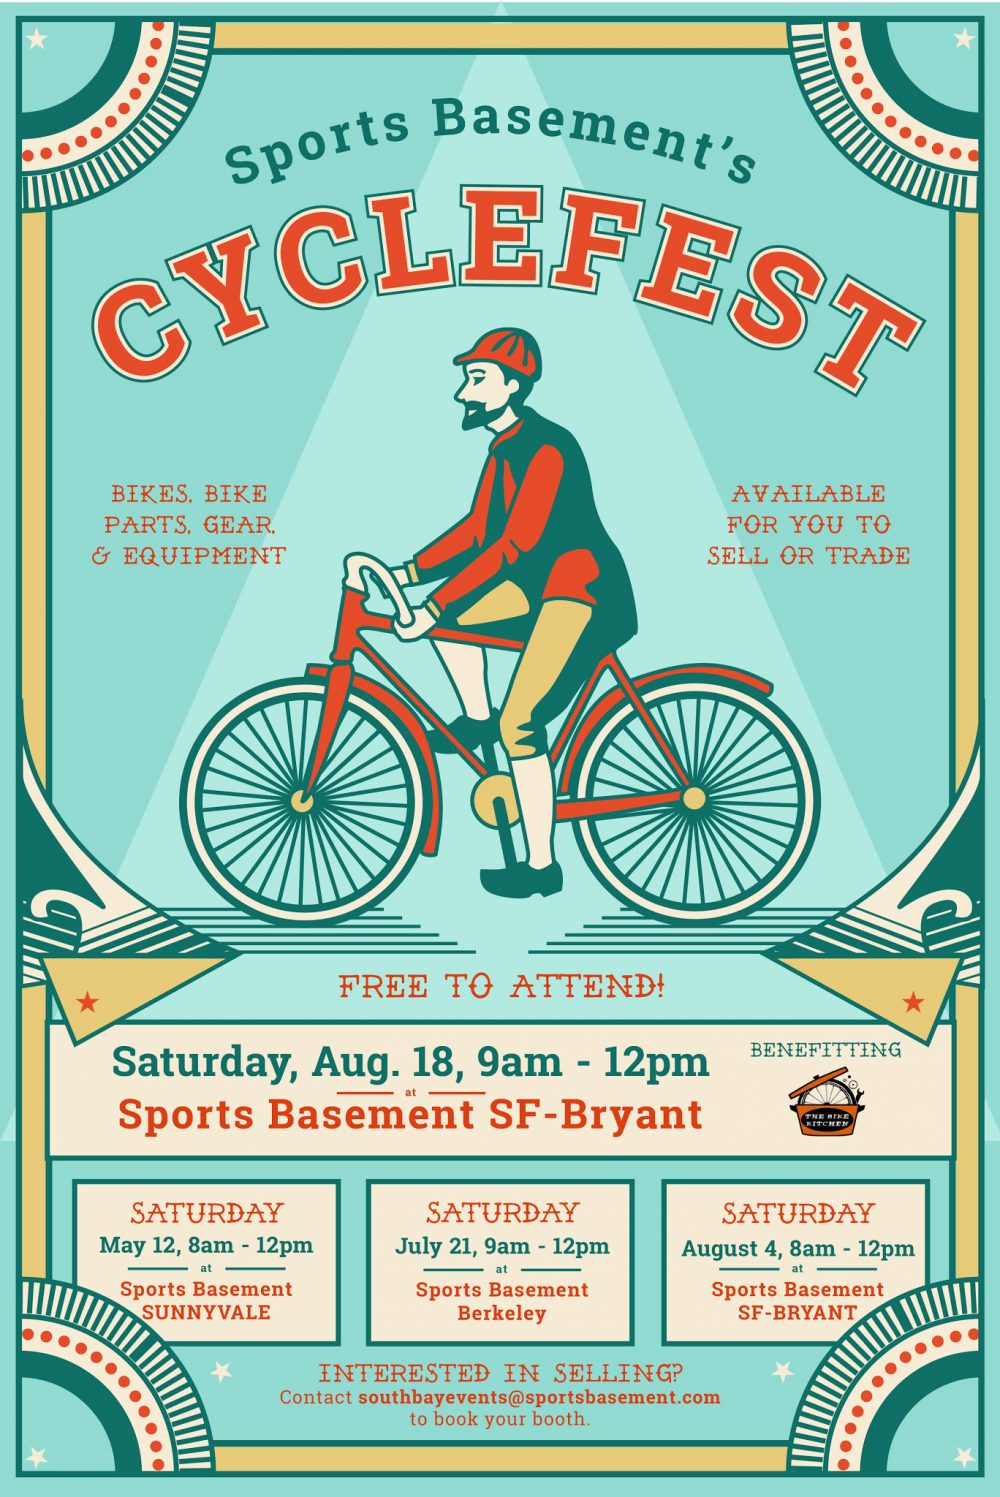 Sports Basement Cycle Fest